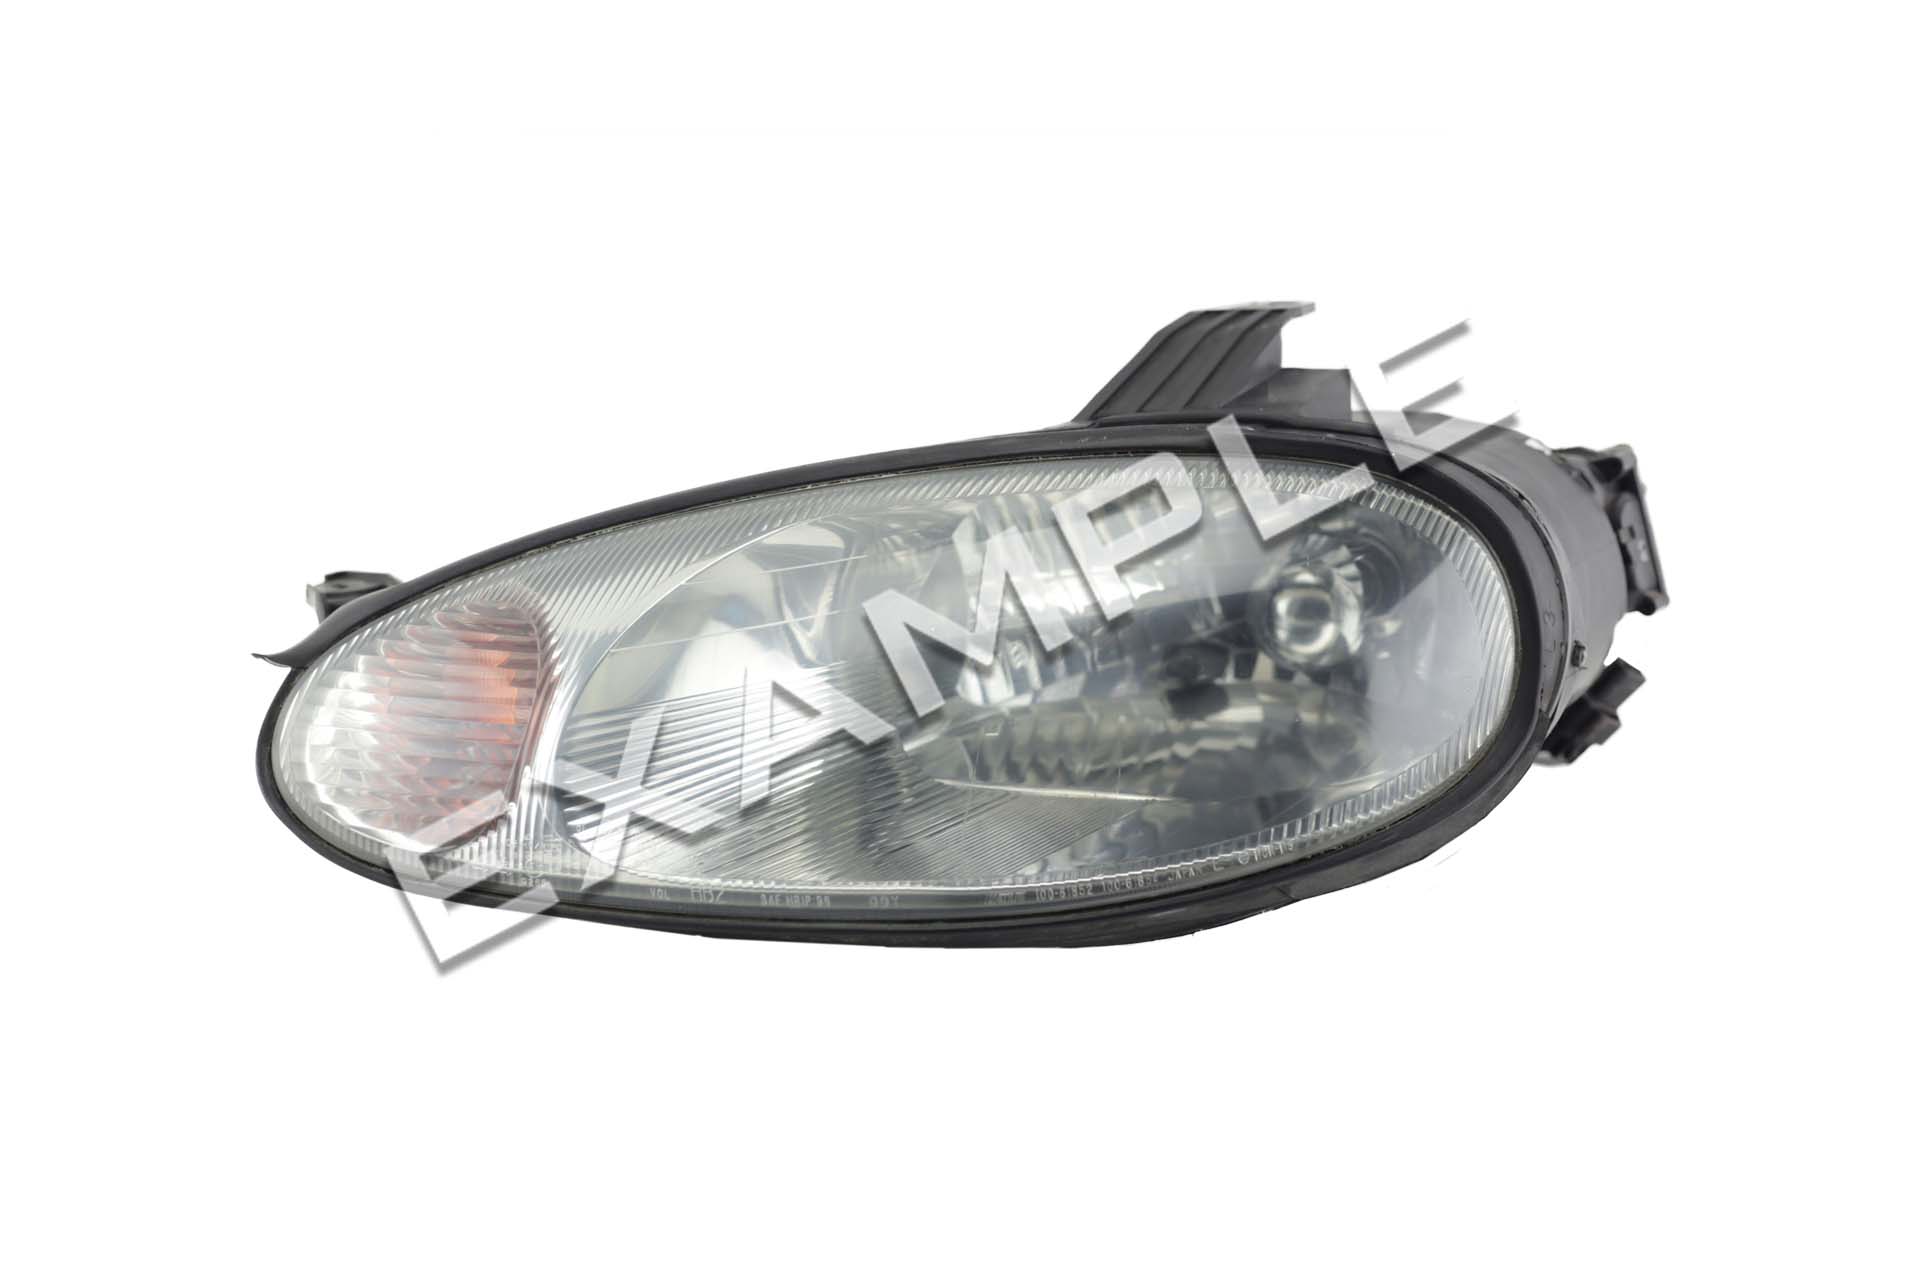 Headlamp Bulb Upgrade, Osram Night Breaker 200, MX5 Mk1/2